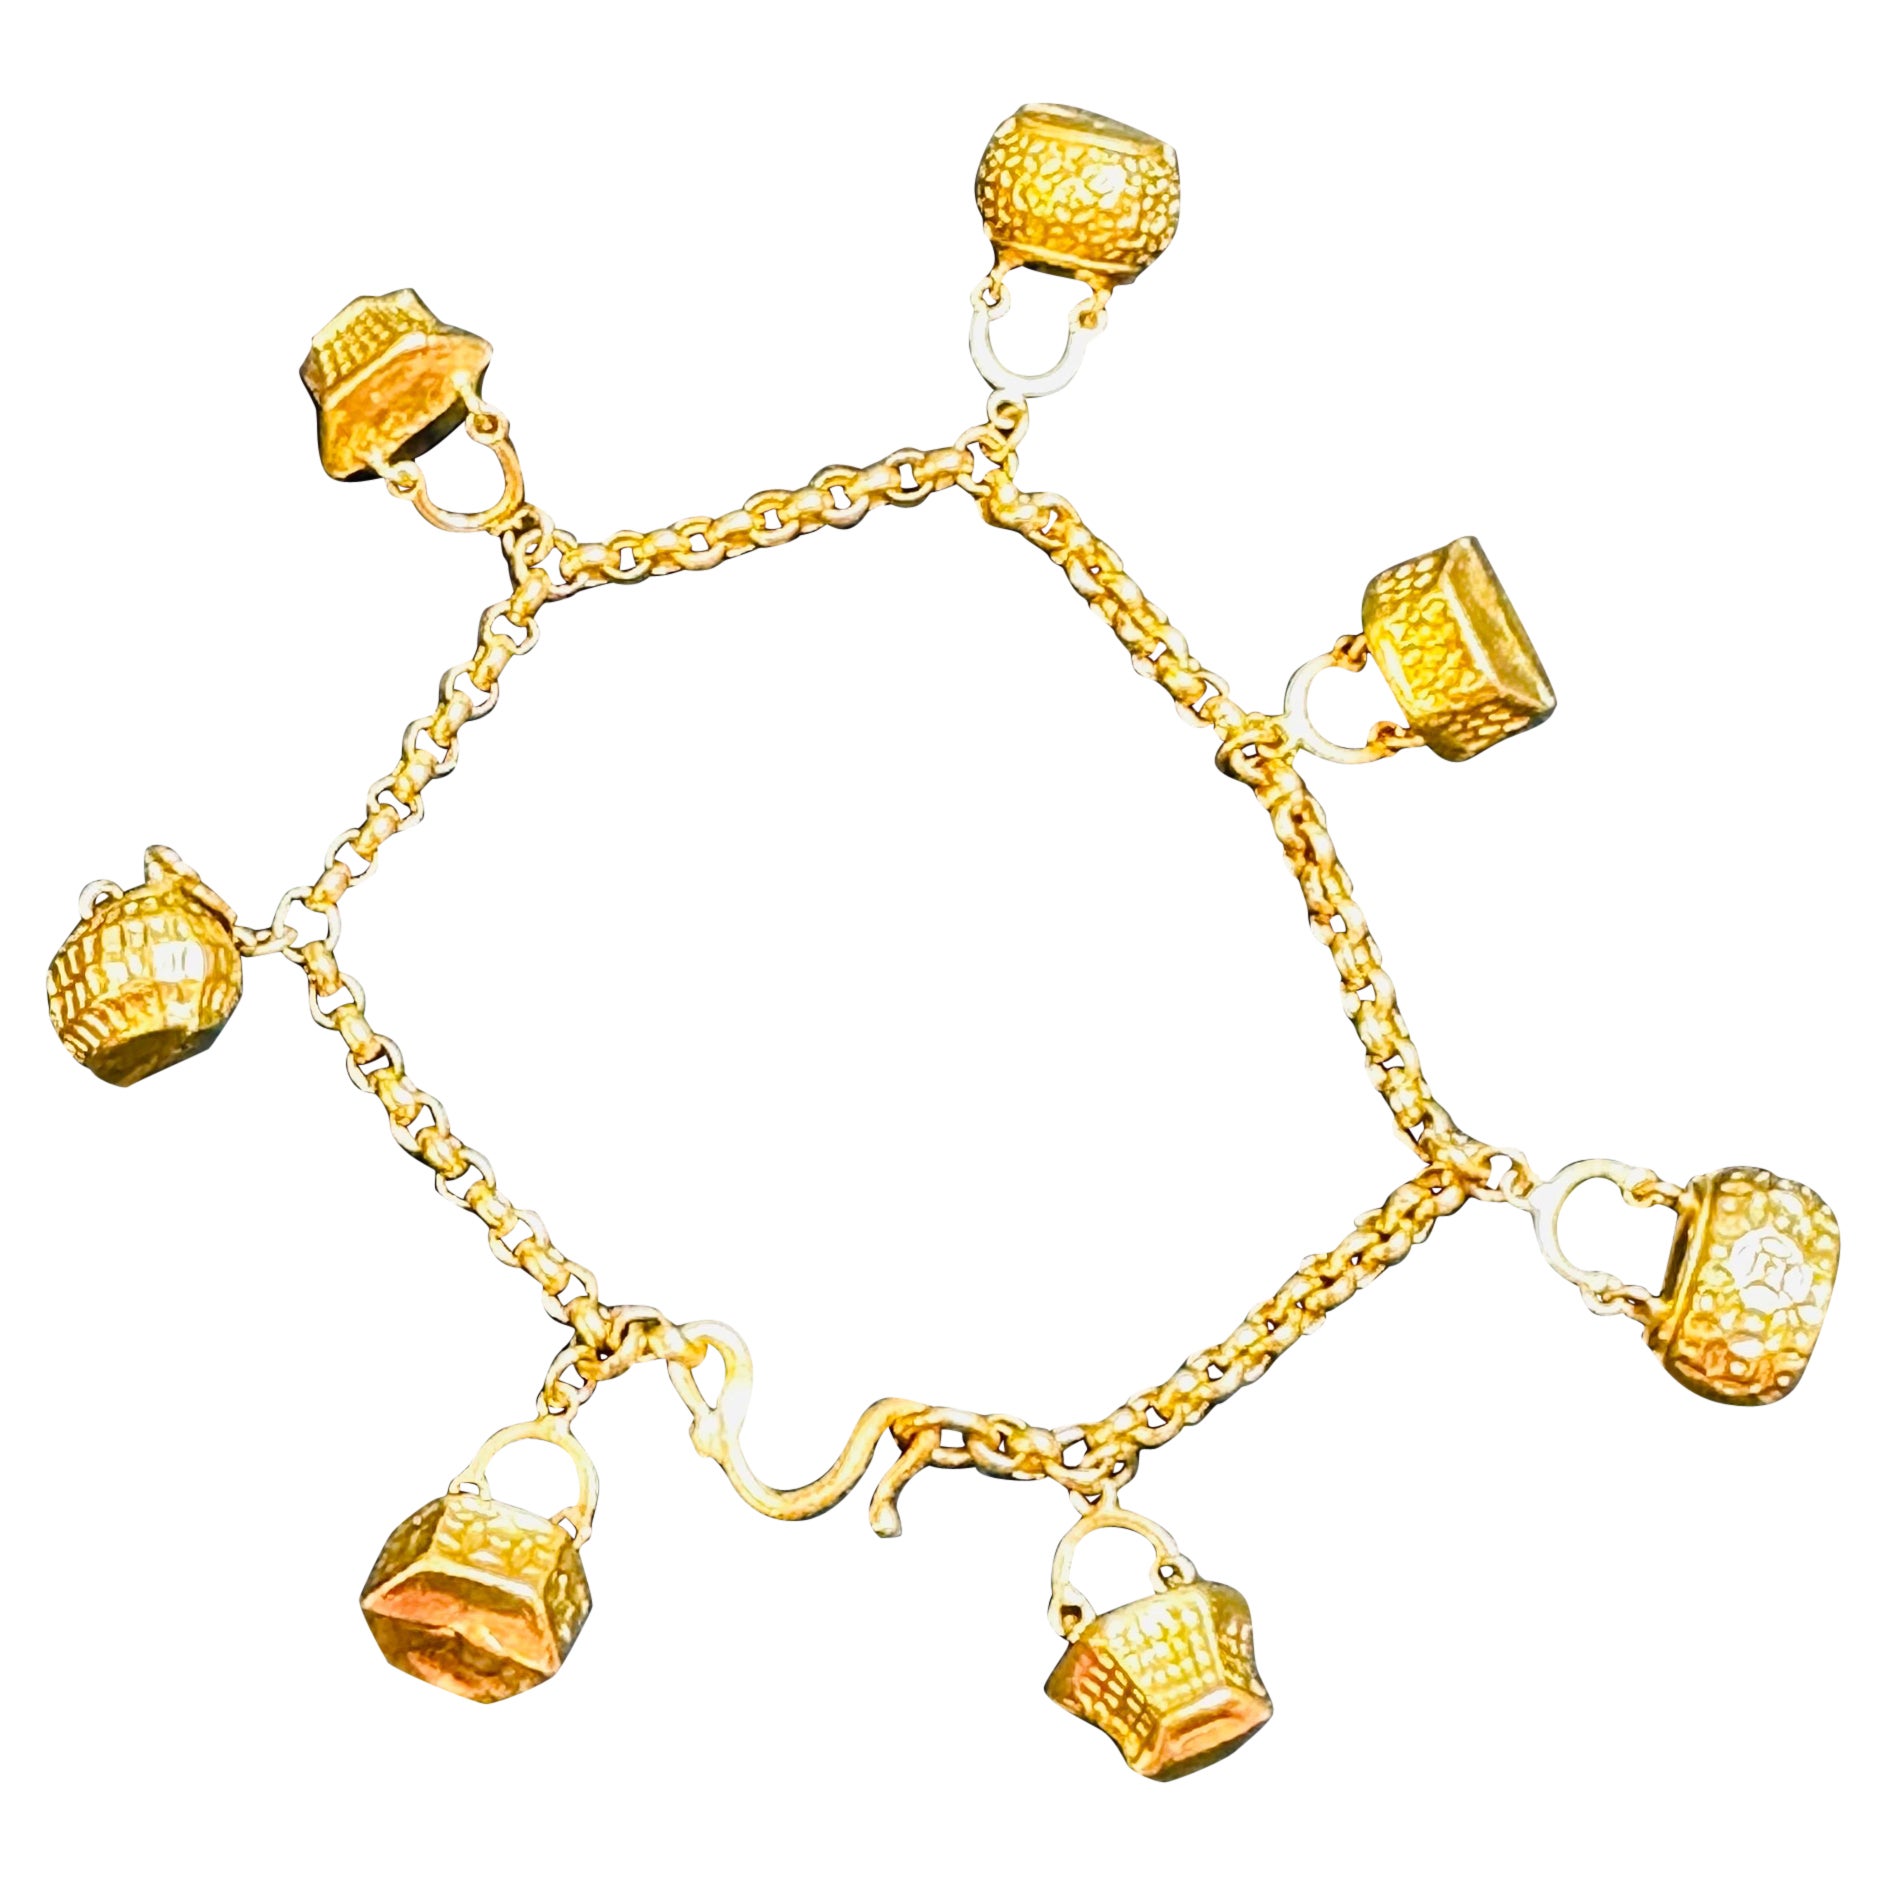 Bracelet à breloques en or jaune pur 24 carats avec 7 breloques en forme de panier de 15,5 carats